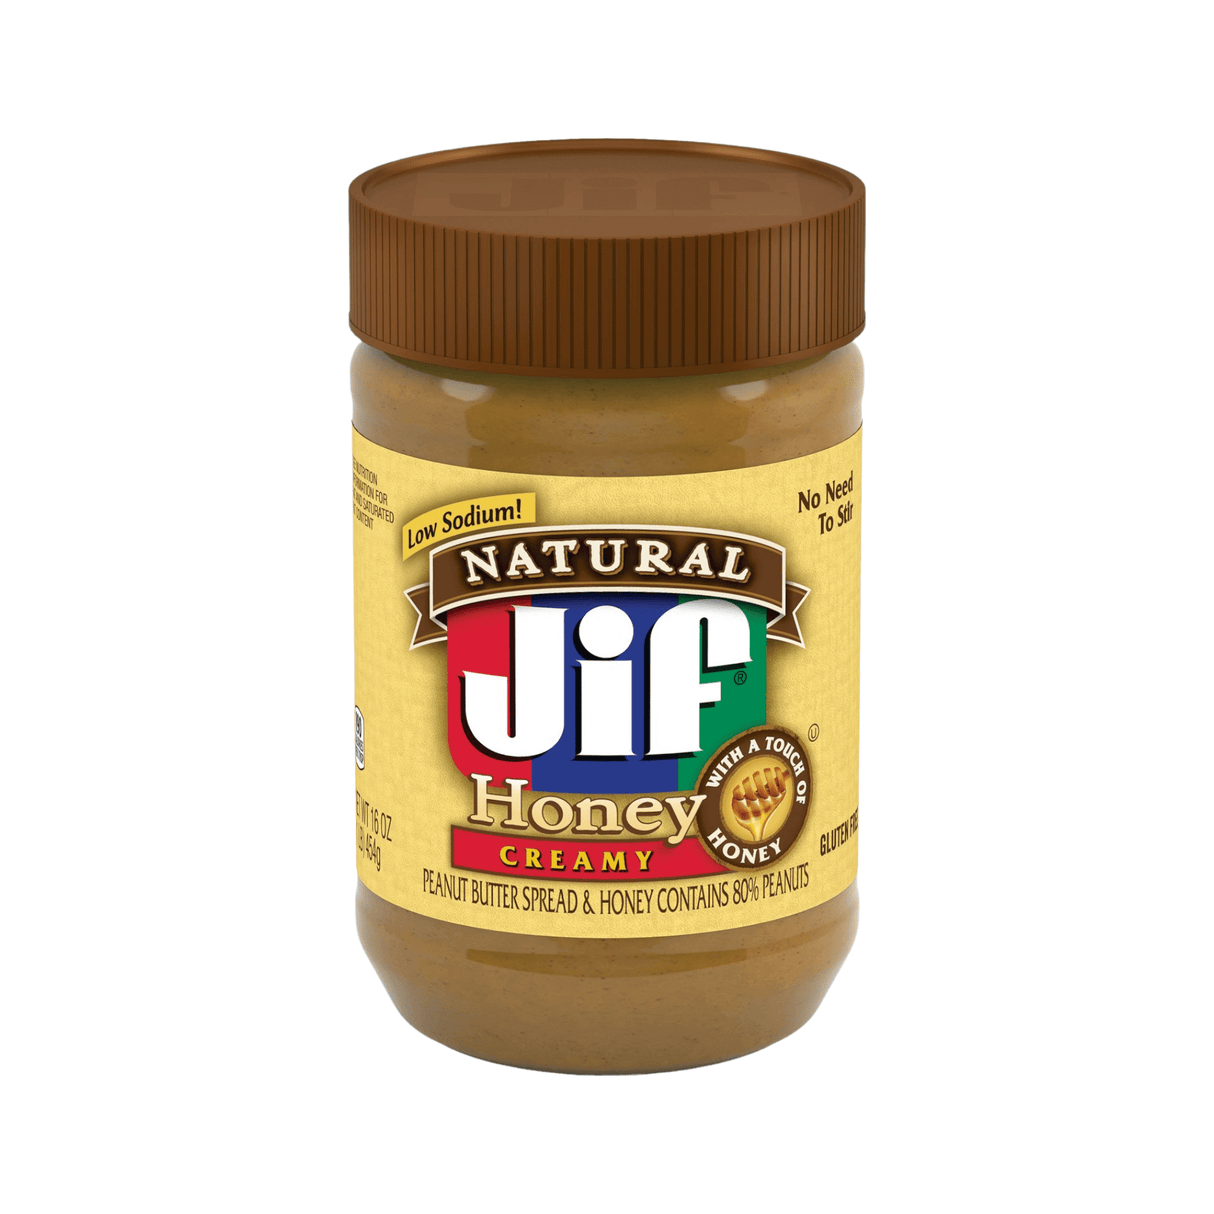 Jif Honey Creamy Peanut Butter